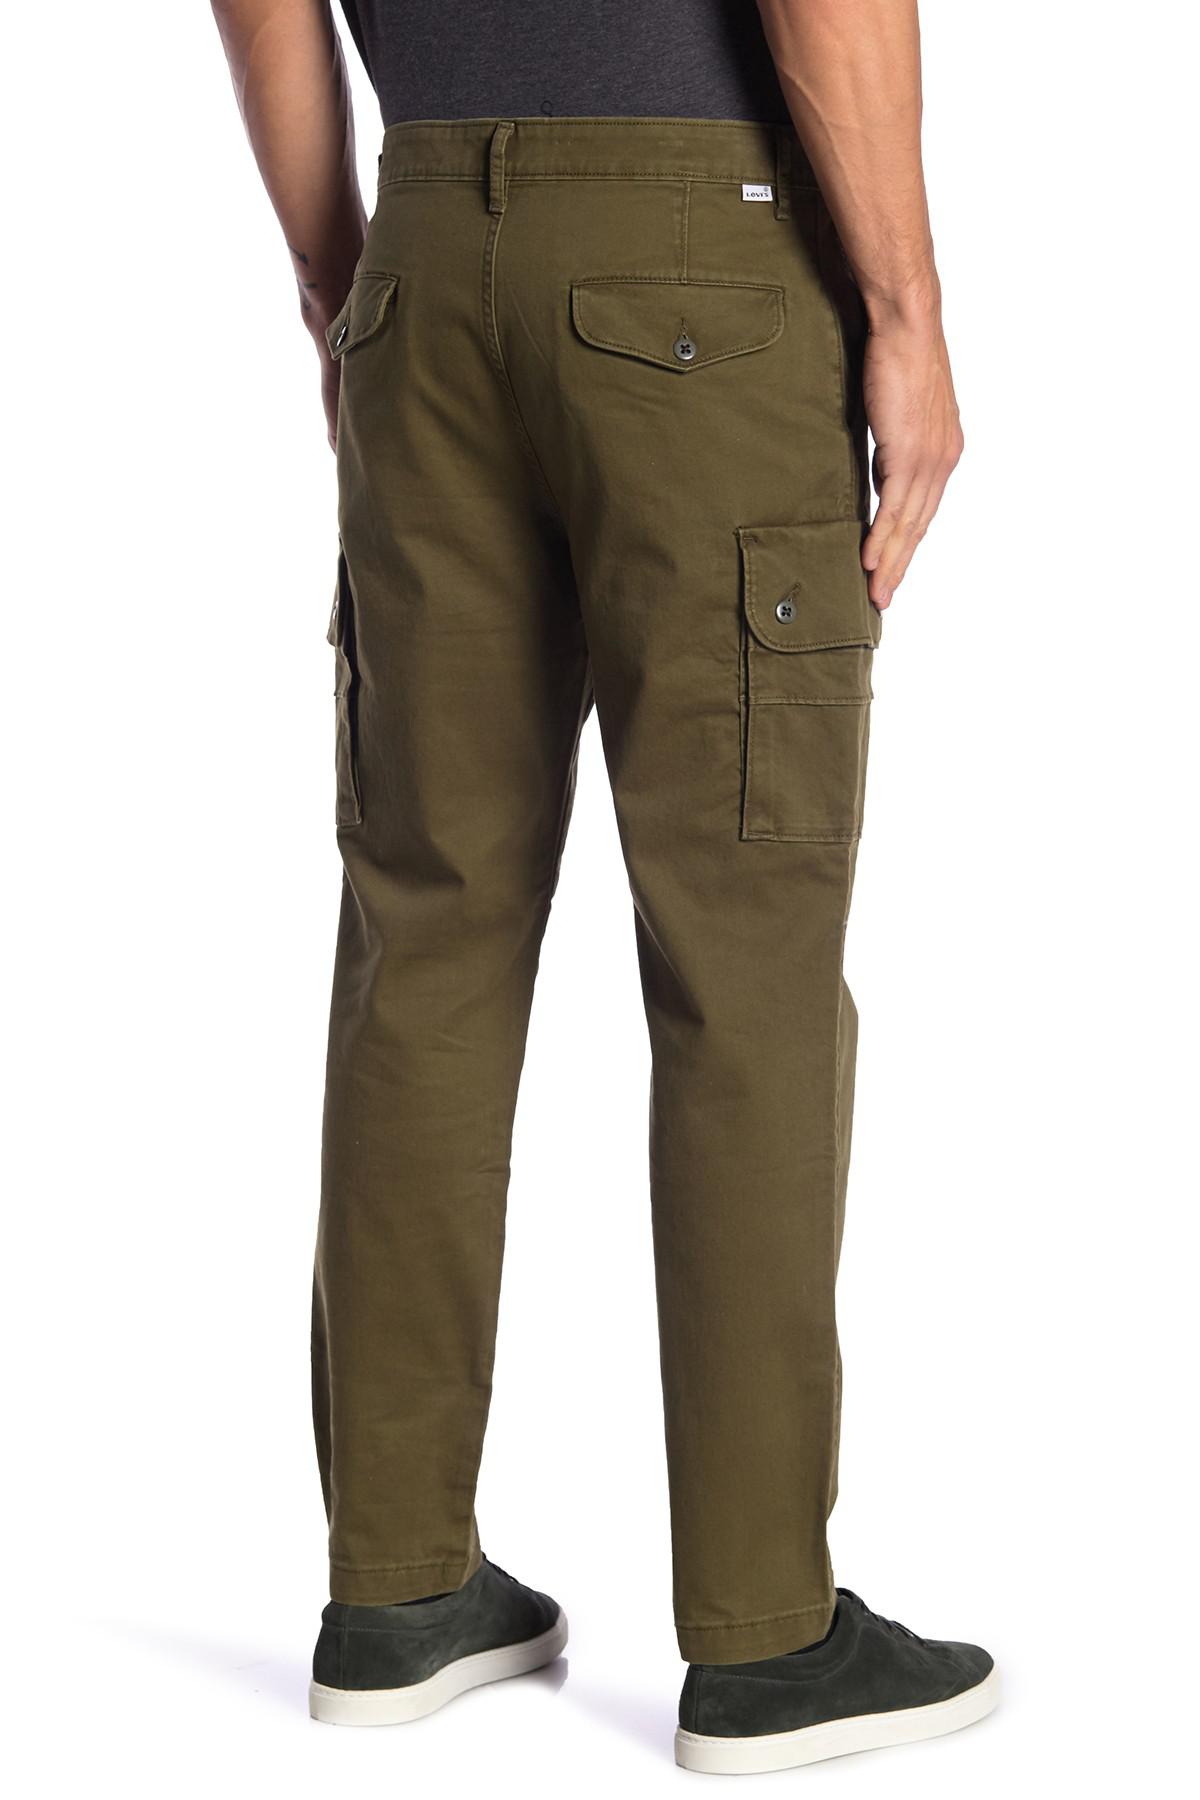 Levi's Cotton Slim Tapered Cargo Pants - 29-34